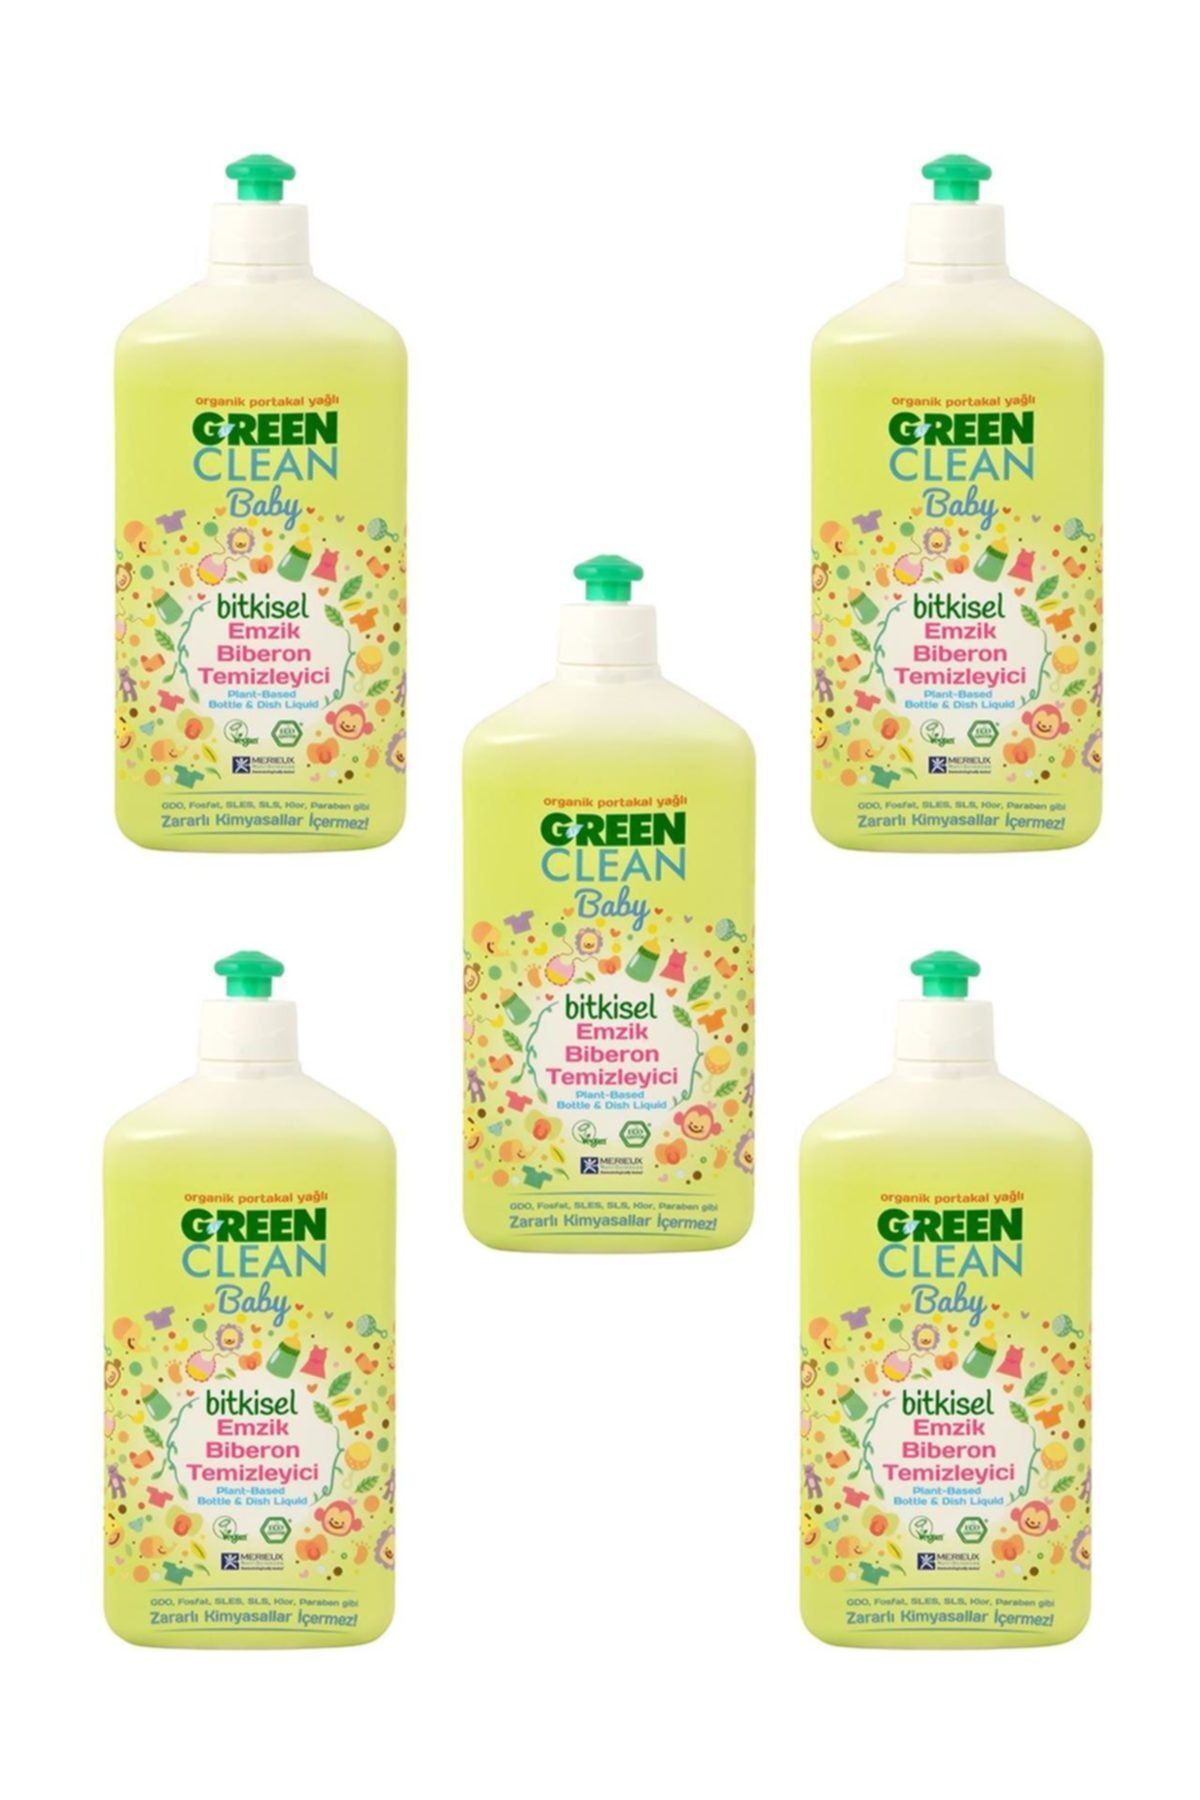 Green Clean Organik Portakal Yağlı Baby Biberon Emzik Temizleyici 500 ml - 5'li set